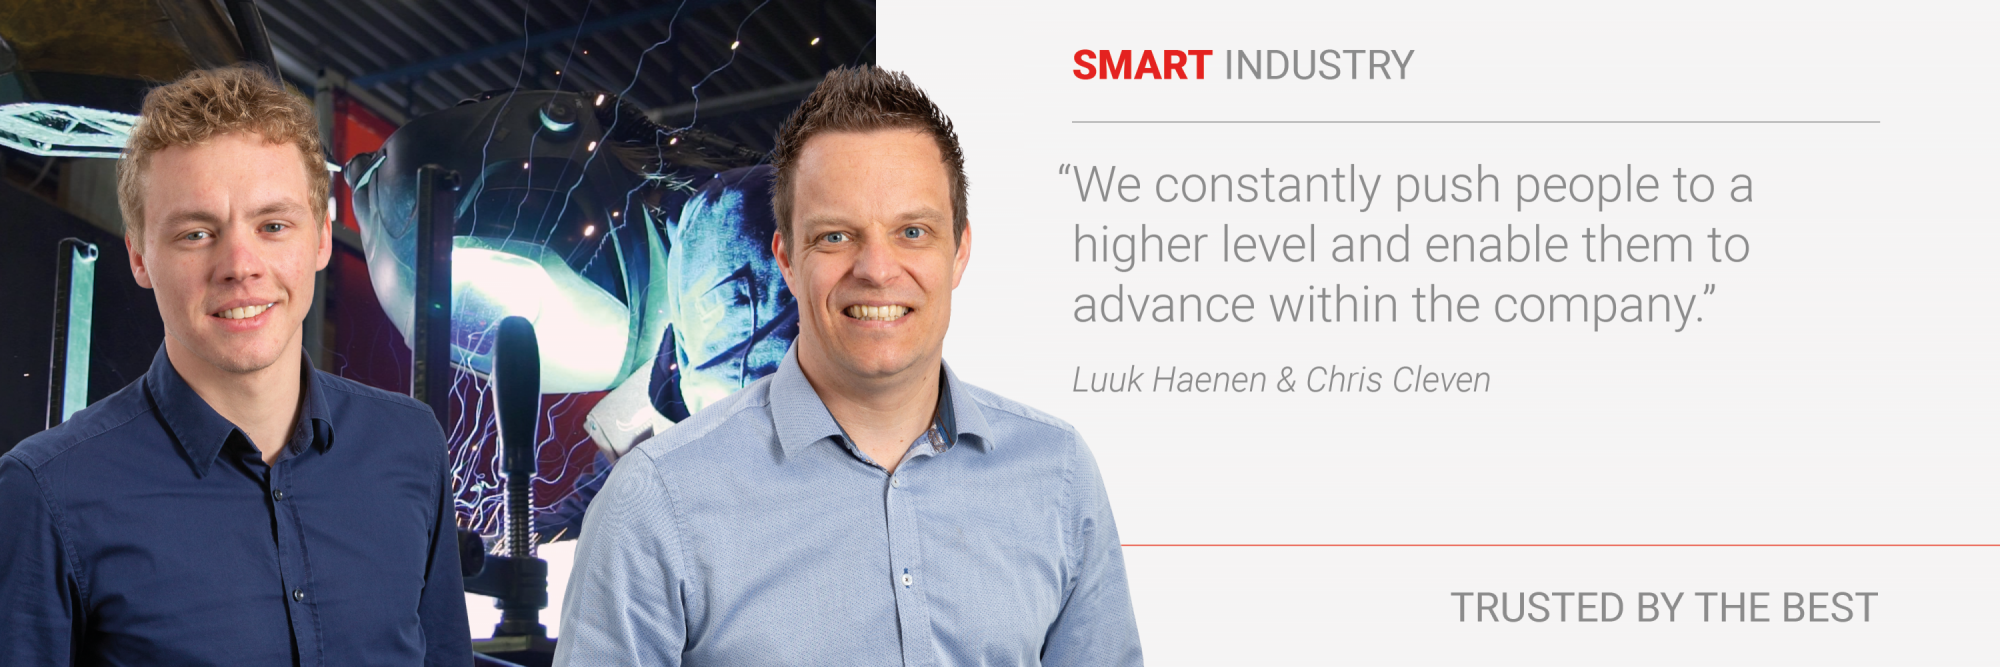 Smart Industry special - quote Luuk en Chris